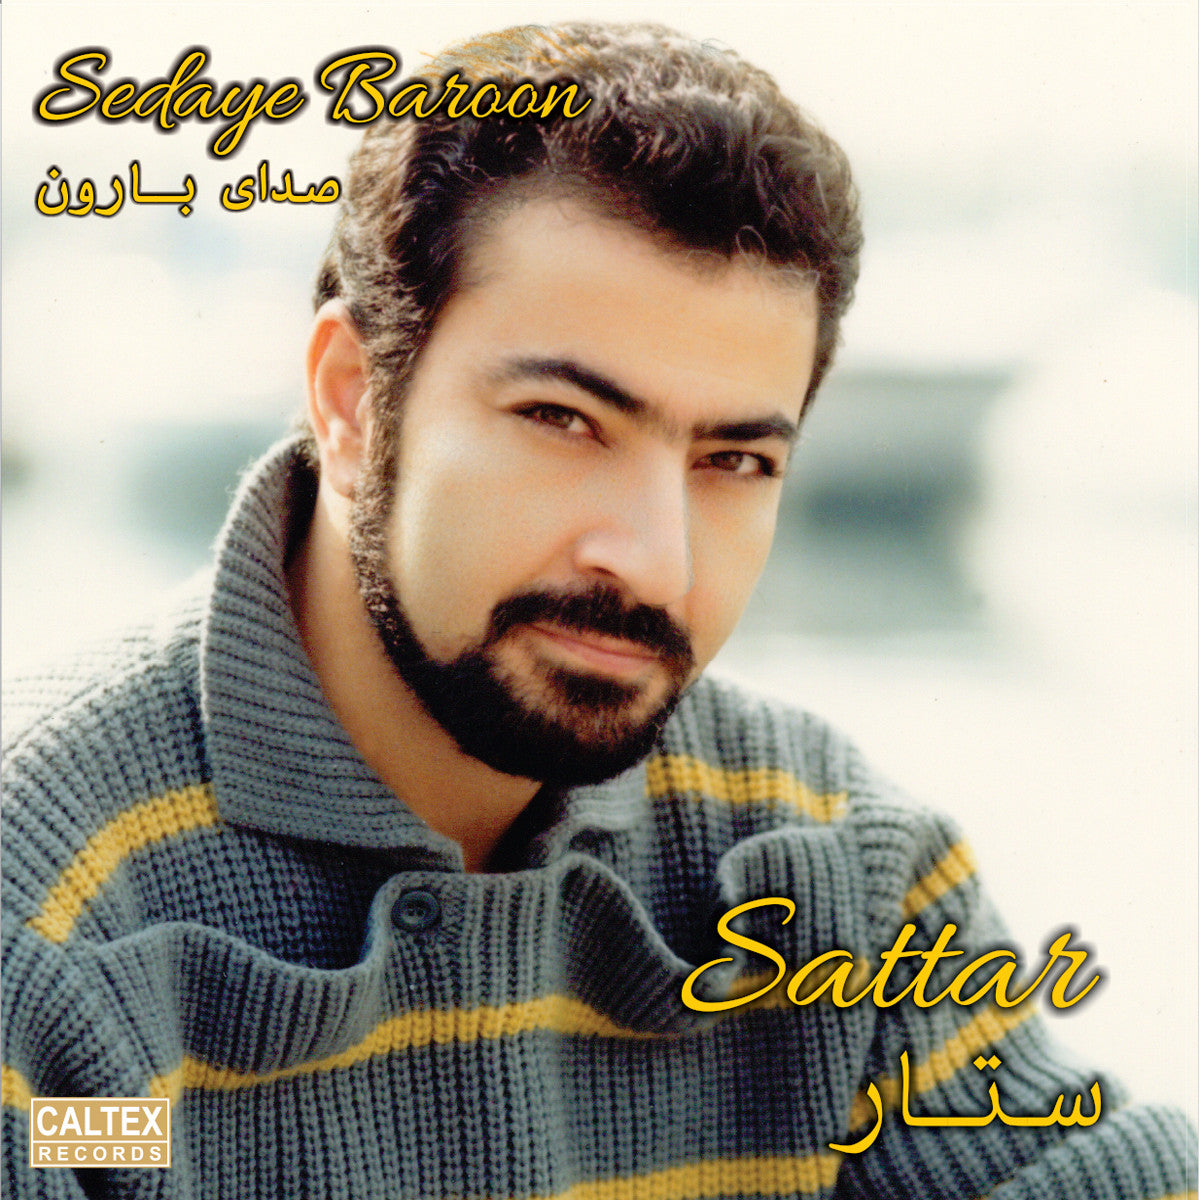 Sattar - Sedaye Baroon (Vinyl)